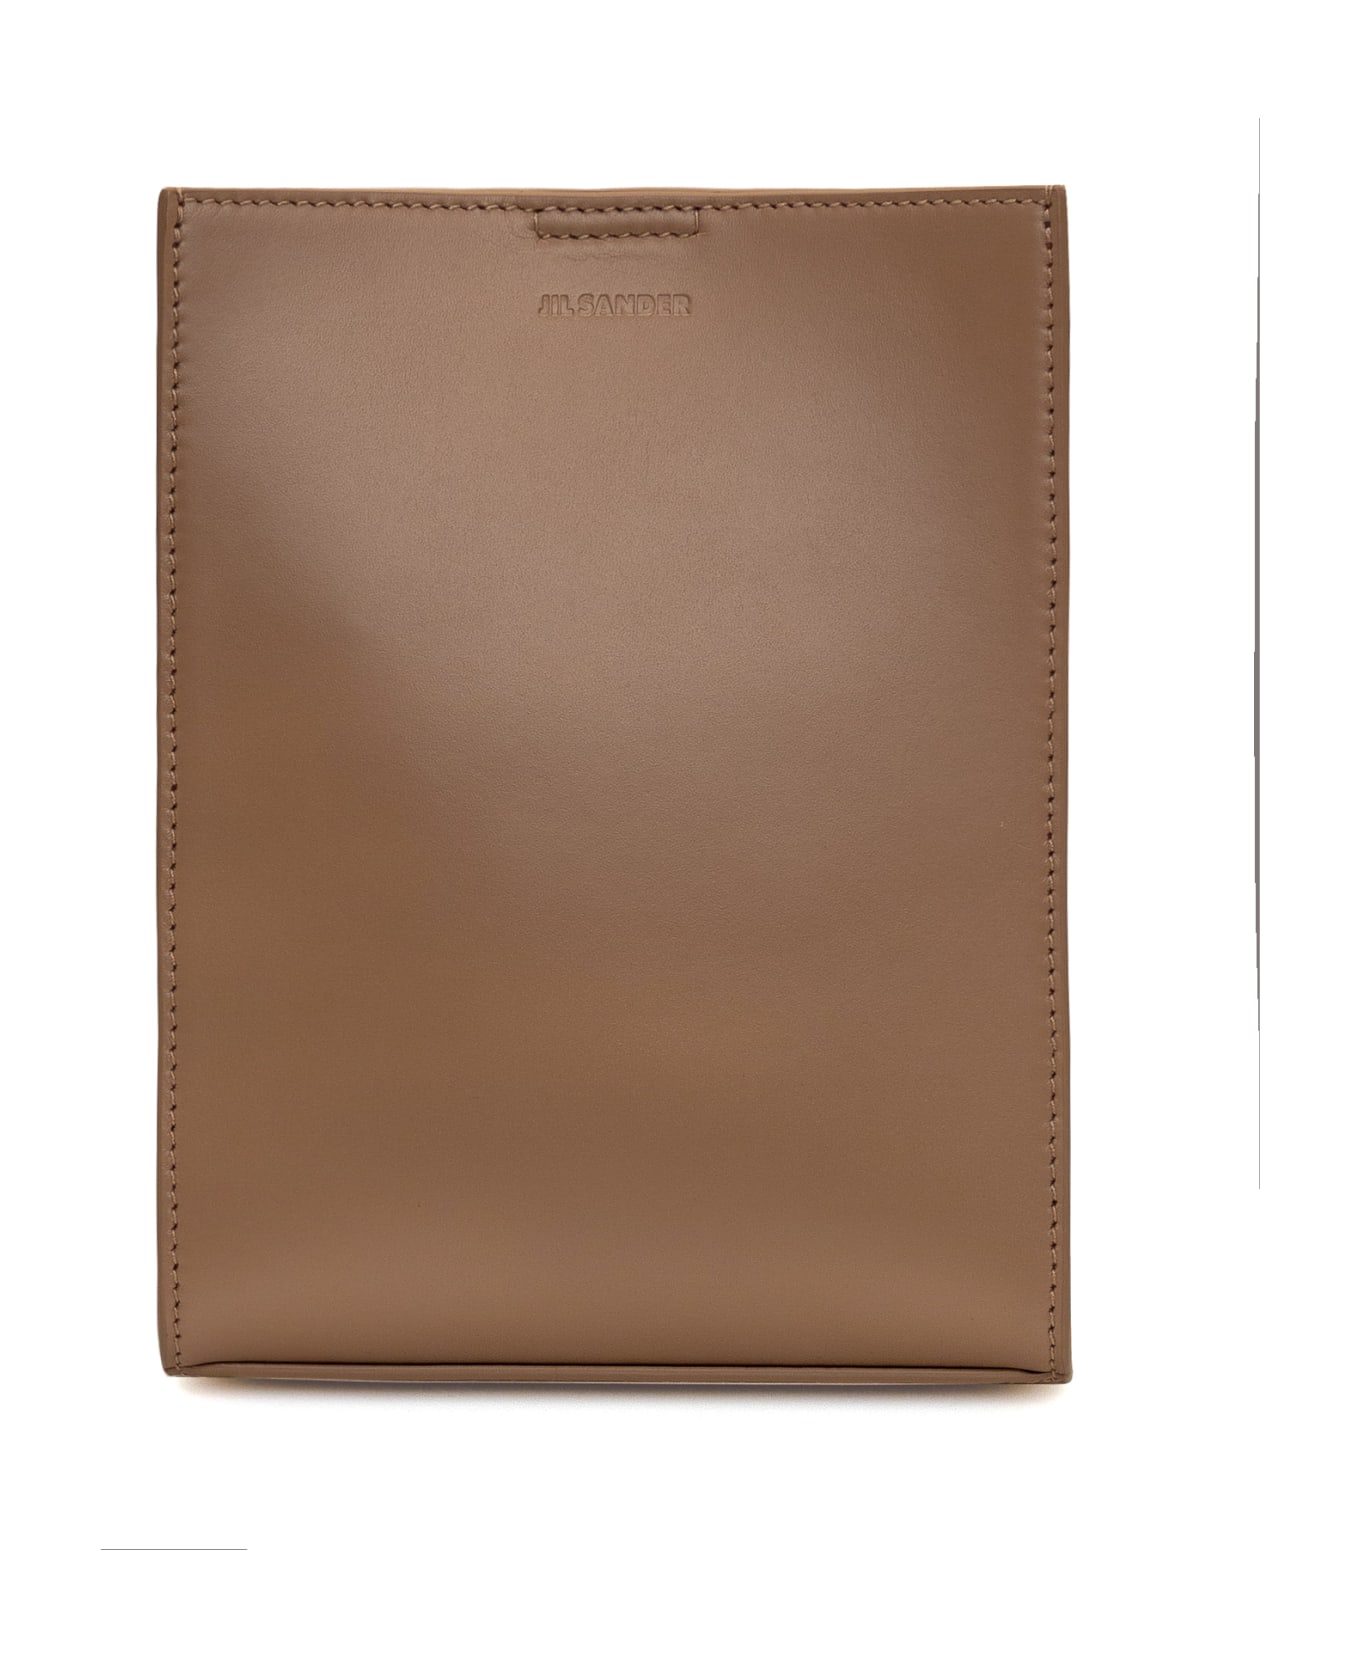 Jil Sander Tangle Bag In Beige Leather - Beige